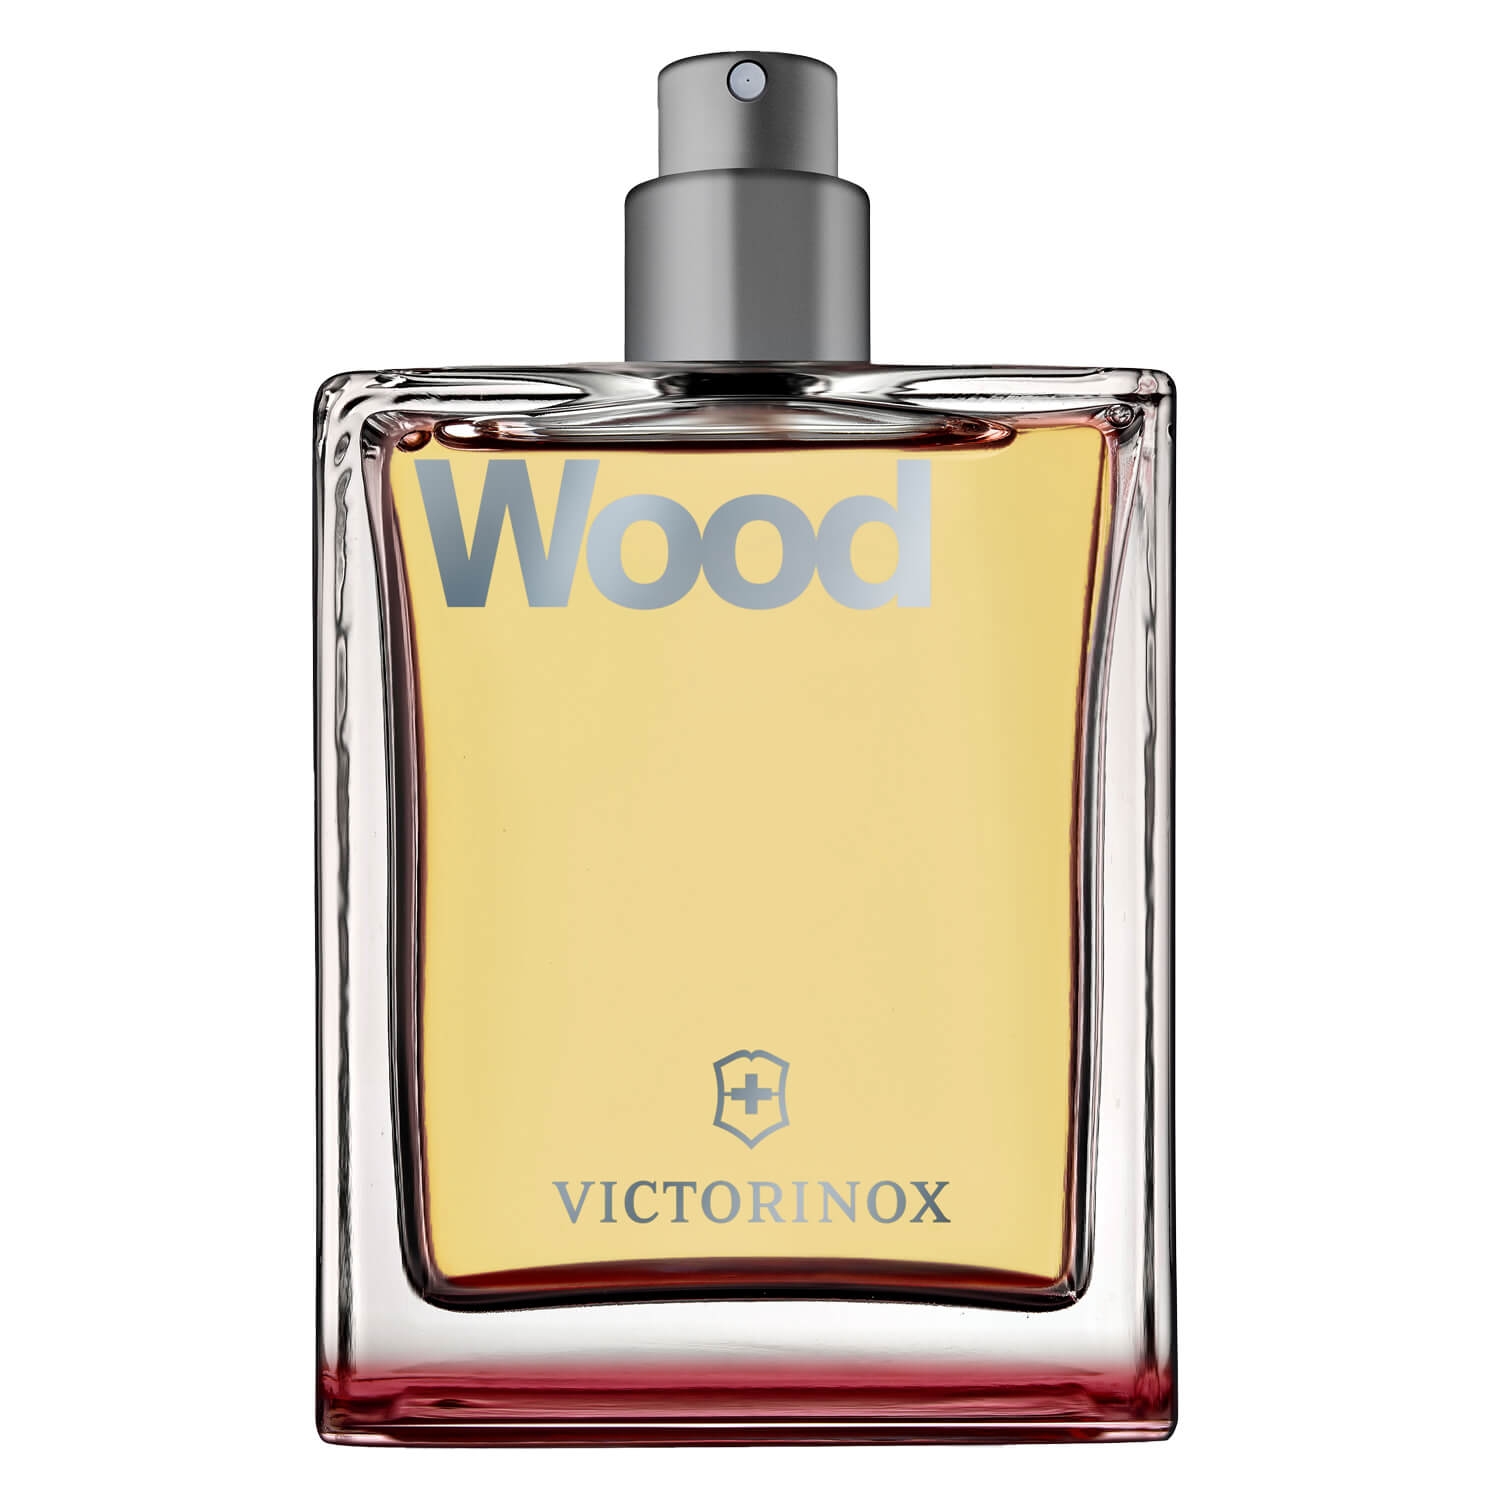 Produktbild von Victorinox - Wood Eau de Toilette